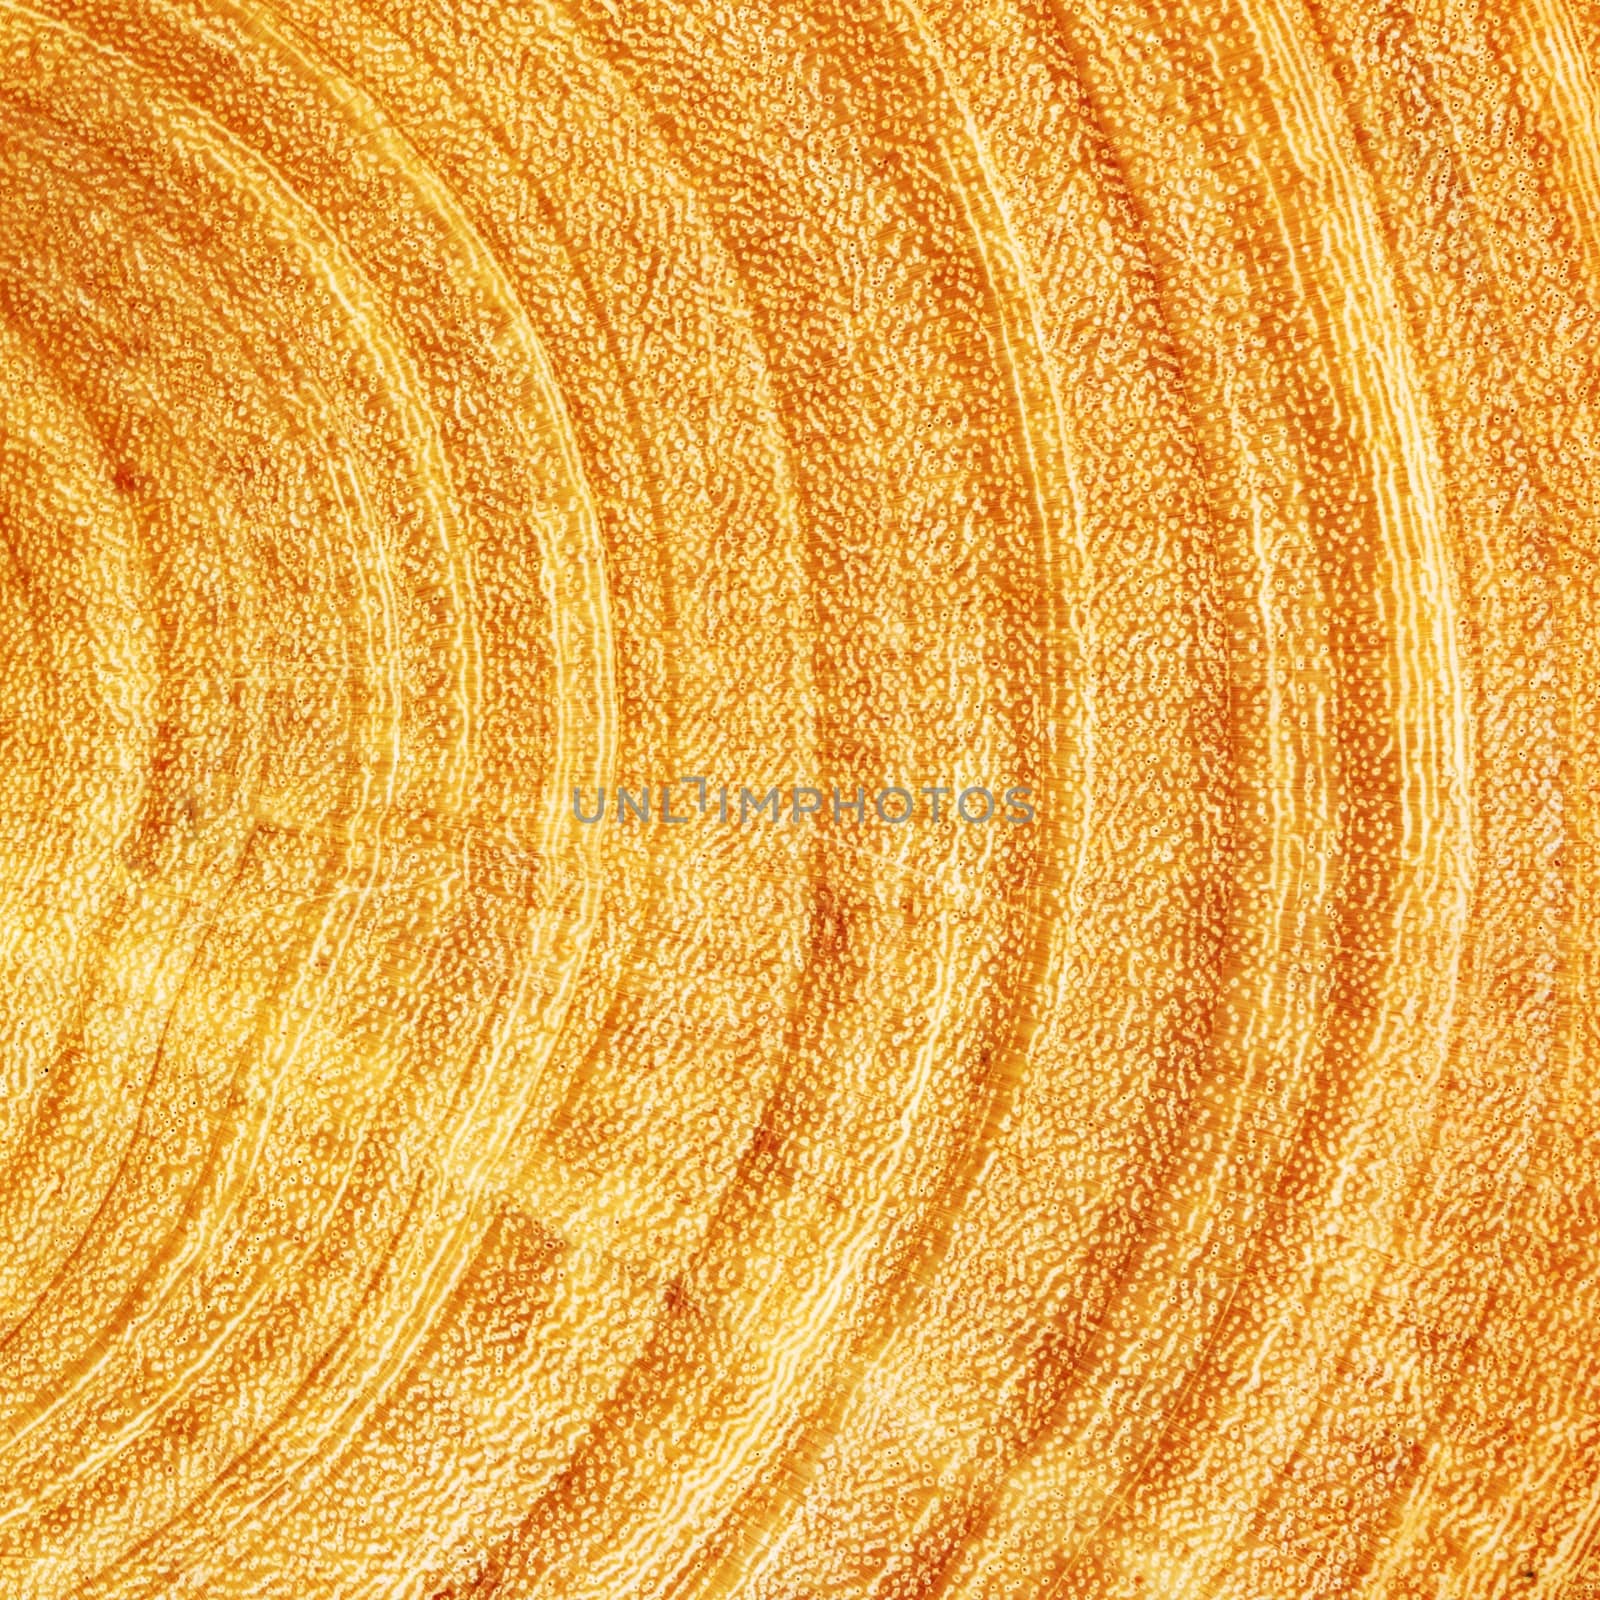 cut of wood texture  by wyoosumran